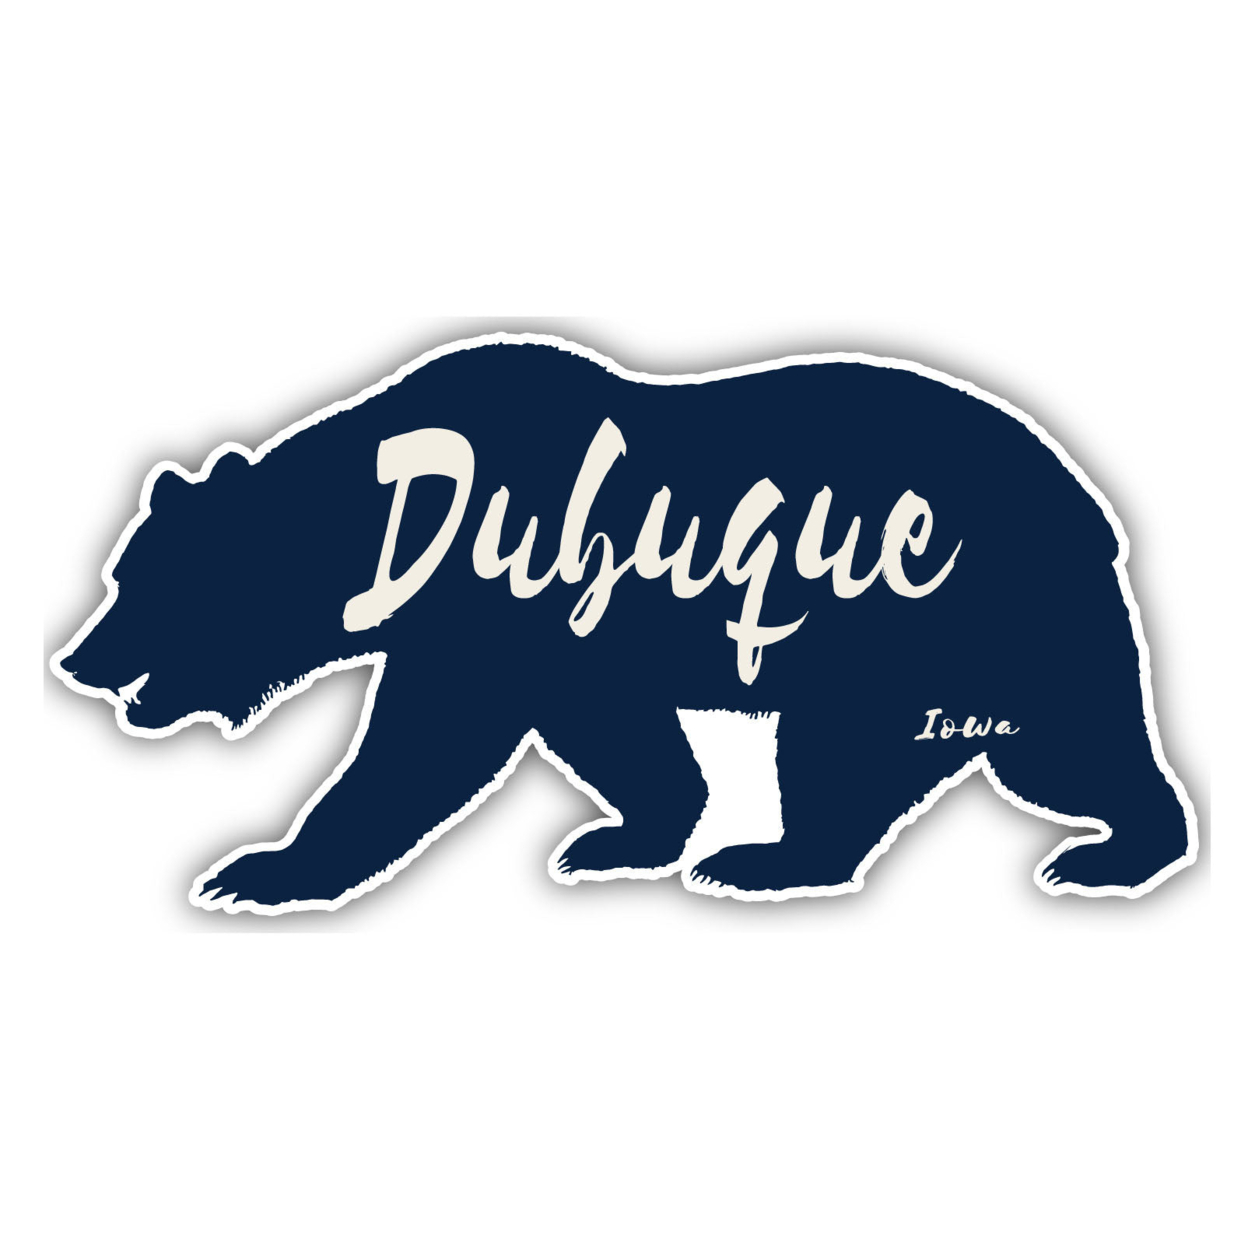 Dubuque Iowa Souvenir Decorative Stickers (Choose Theme And Size) - 4-Pack, 10-Inch, Bear